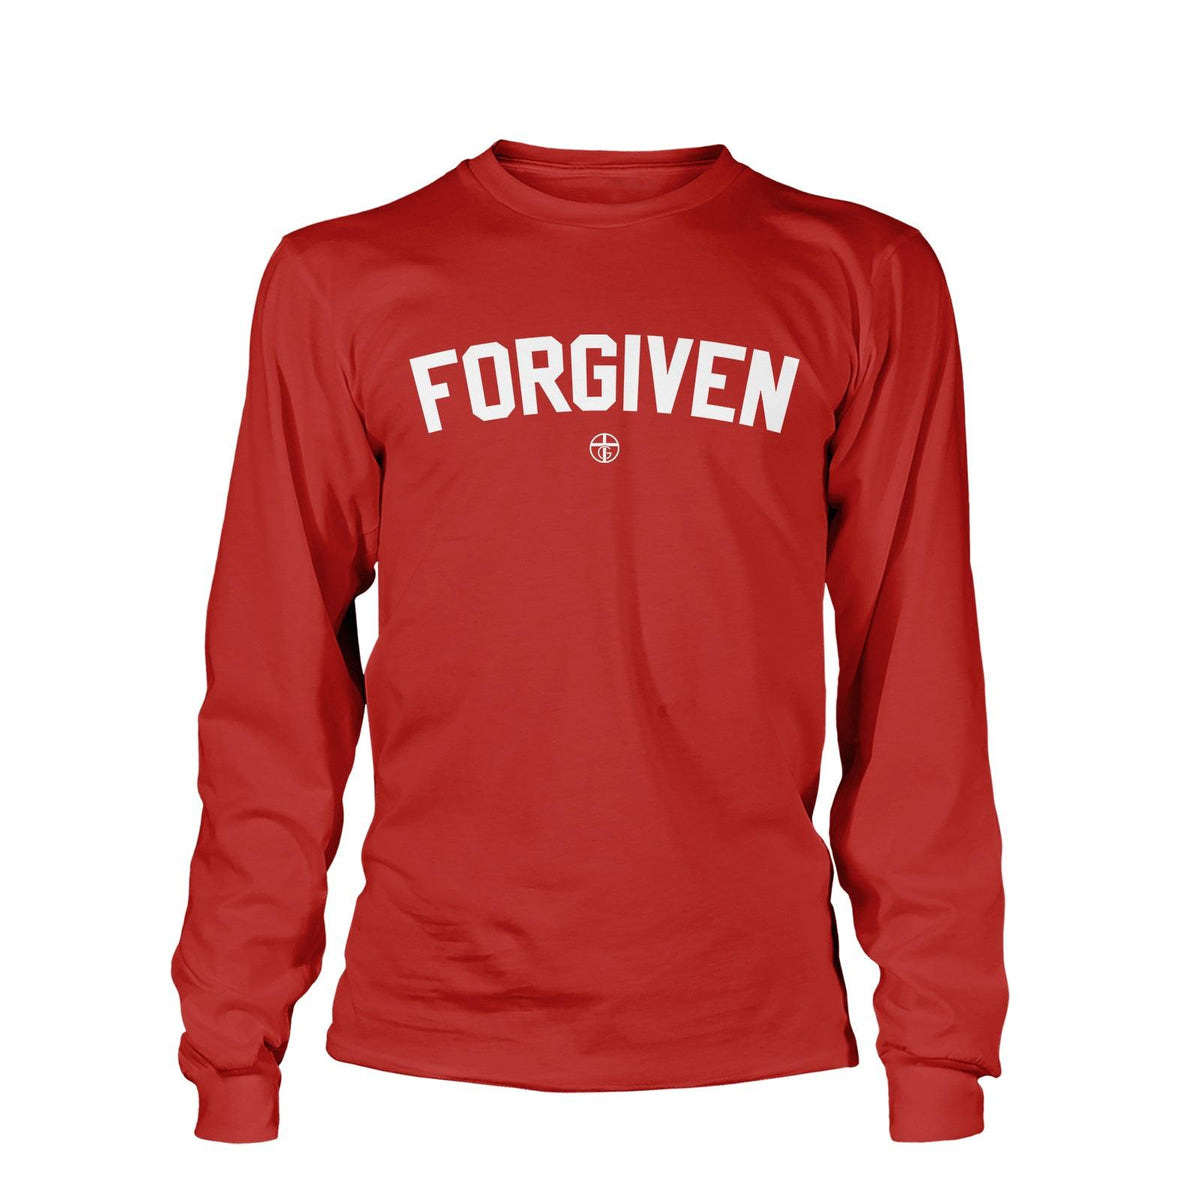 Forgiven Long Sleeve T-Shirt - Our True God